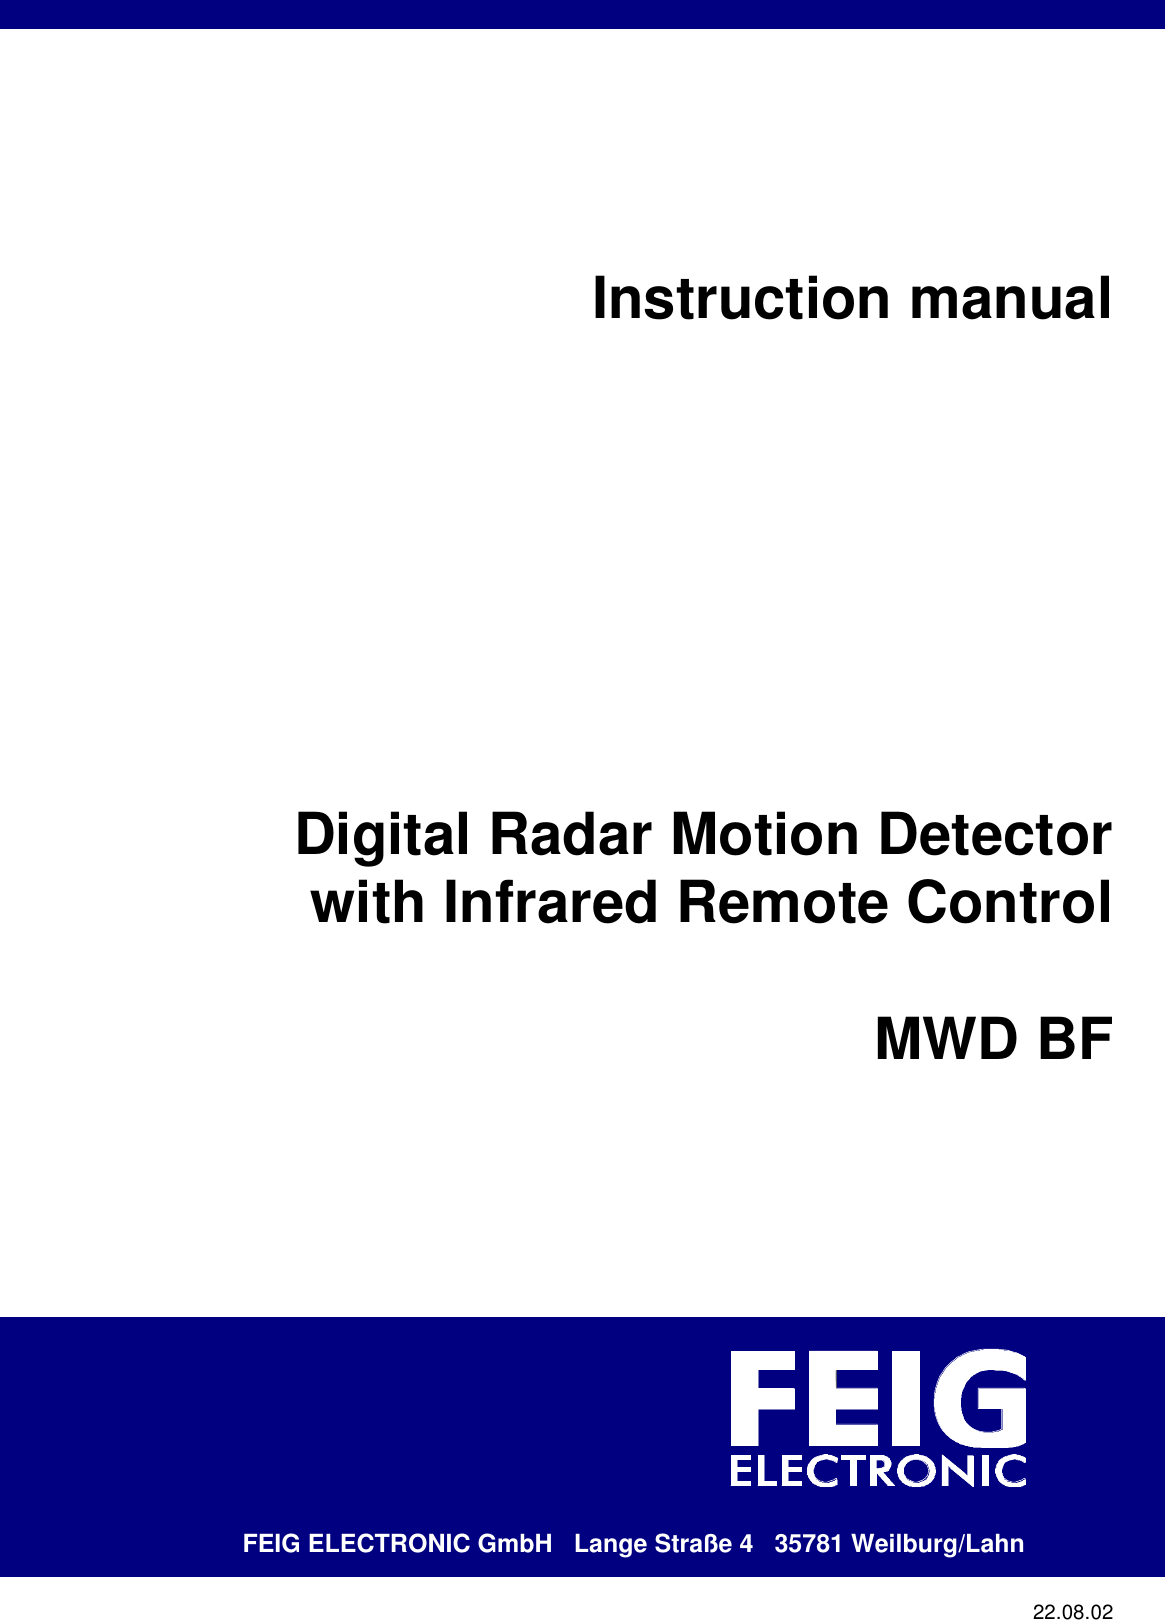 22.08.02Instruction manualDigital Radar Motion Detectorwith Infrared Remote ControlMWD BFFEIG ELECTRONIC GmbH   Lange Straße 4   35781 Weilburg/Lahn